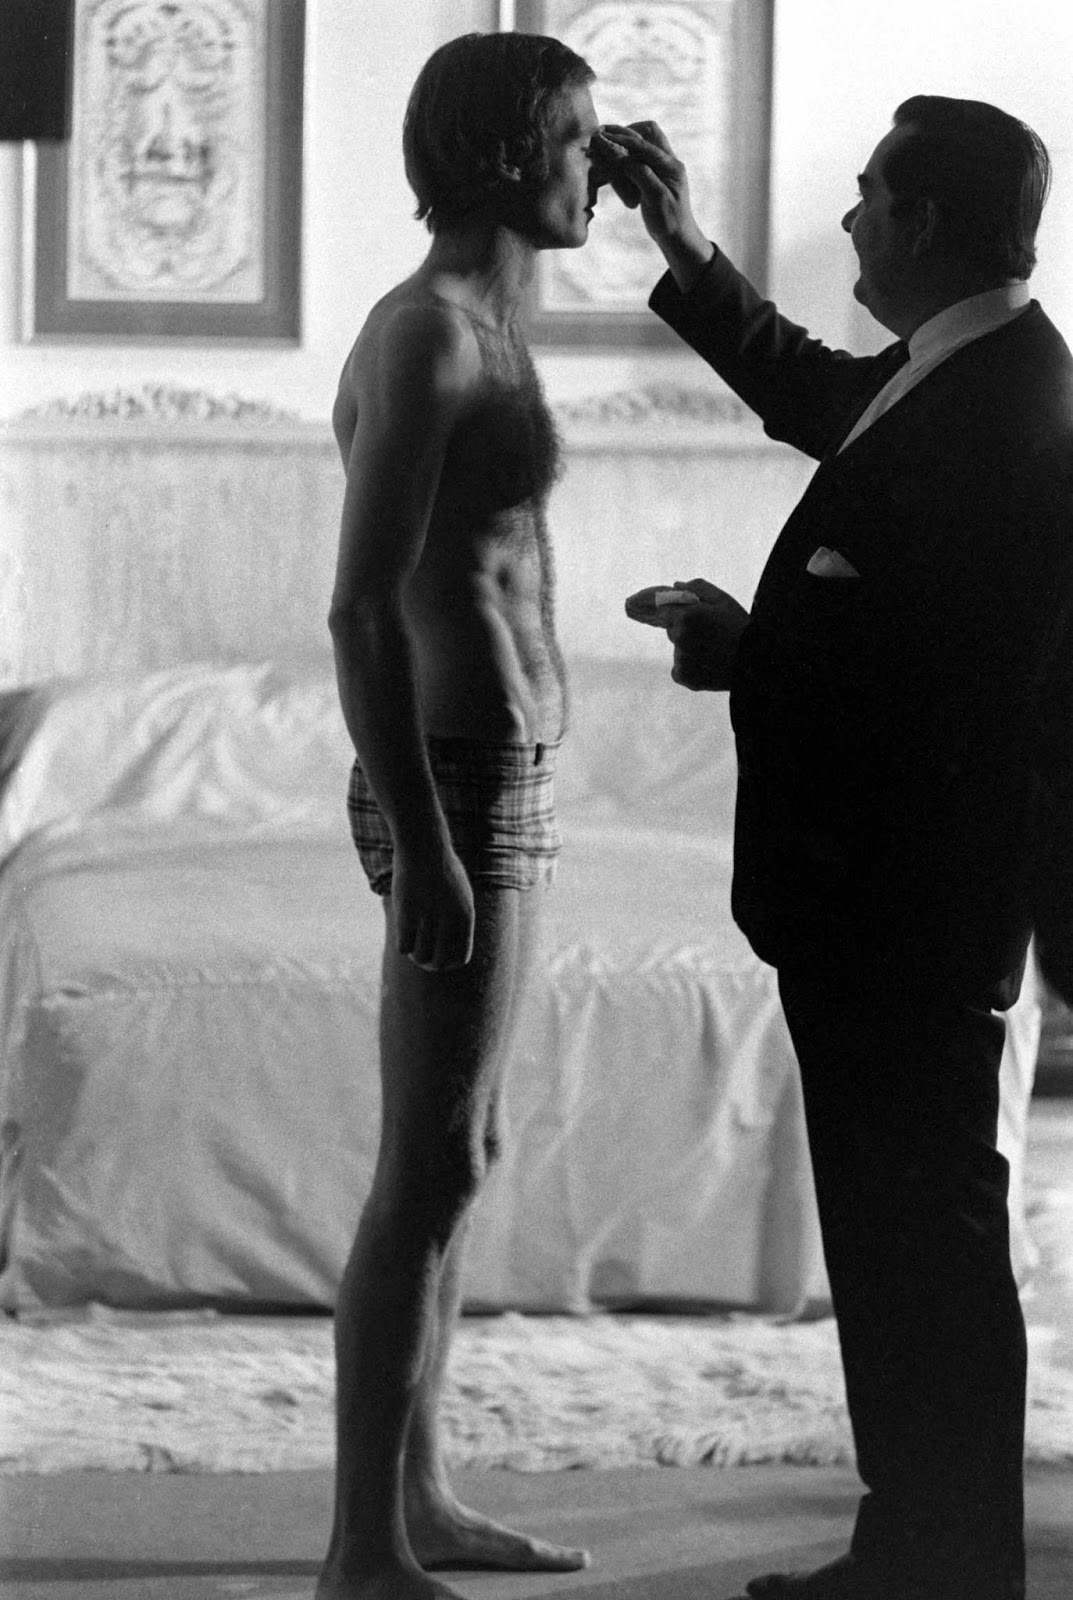 James Bond audition candidate John Richardson (left), in profile, 1967 audition.